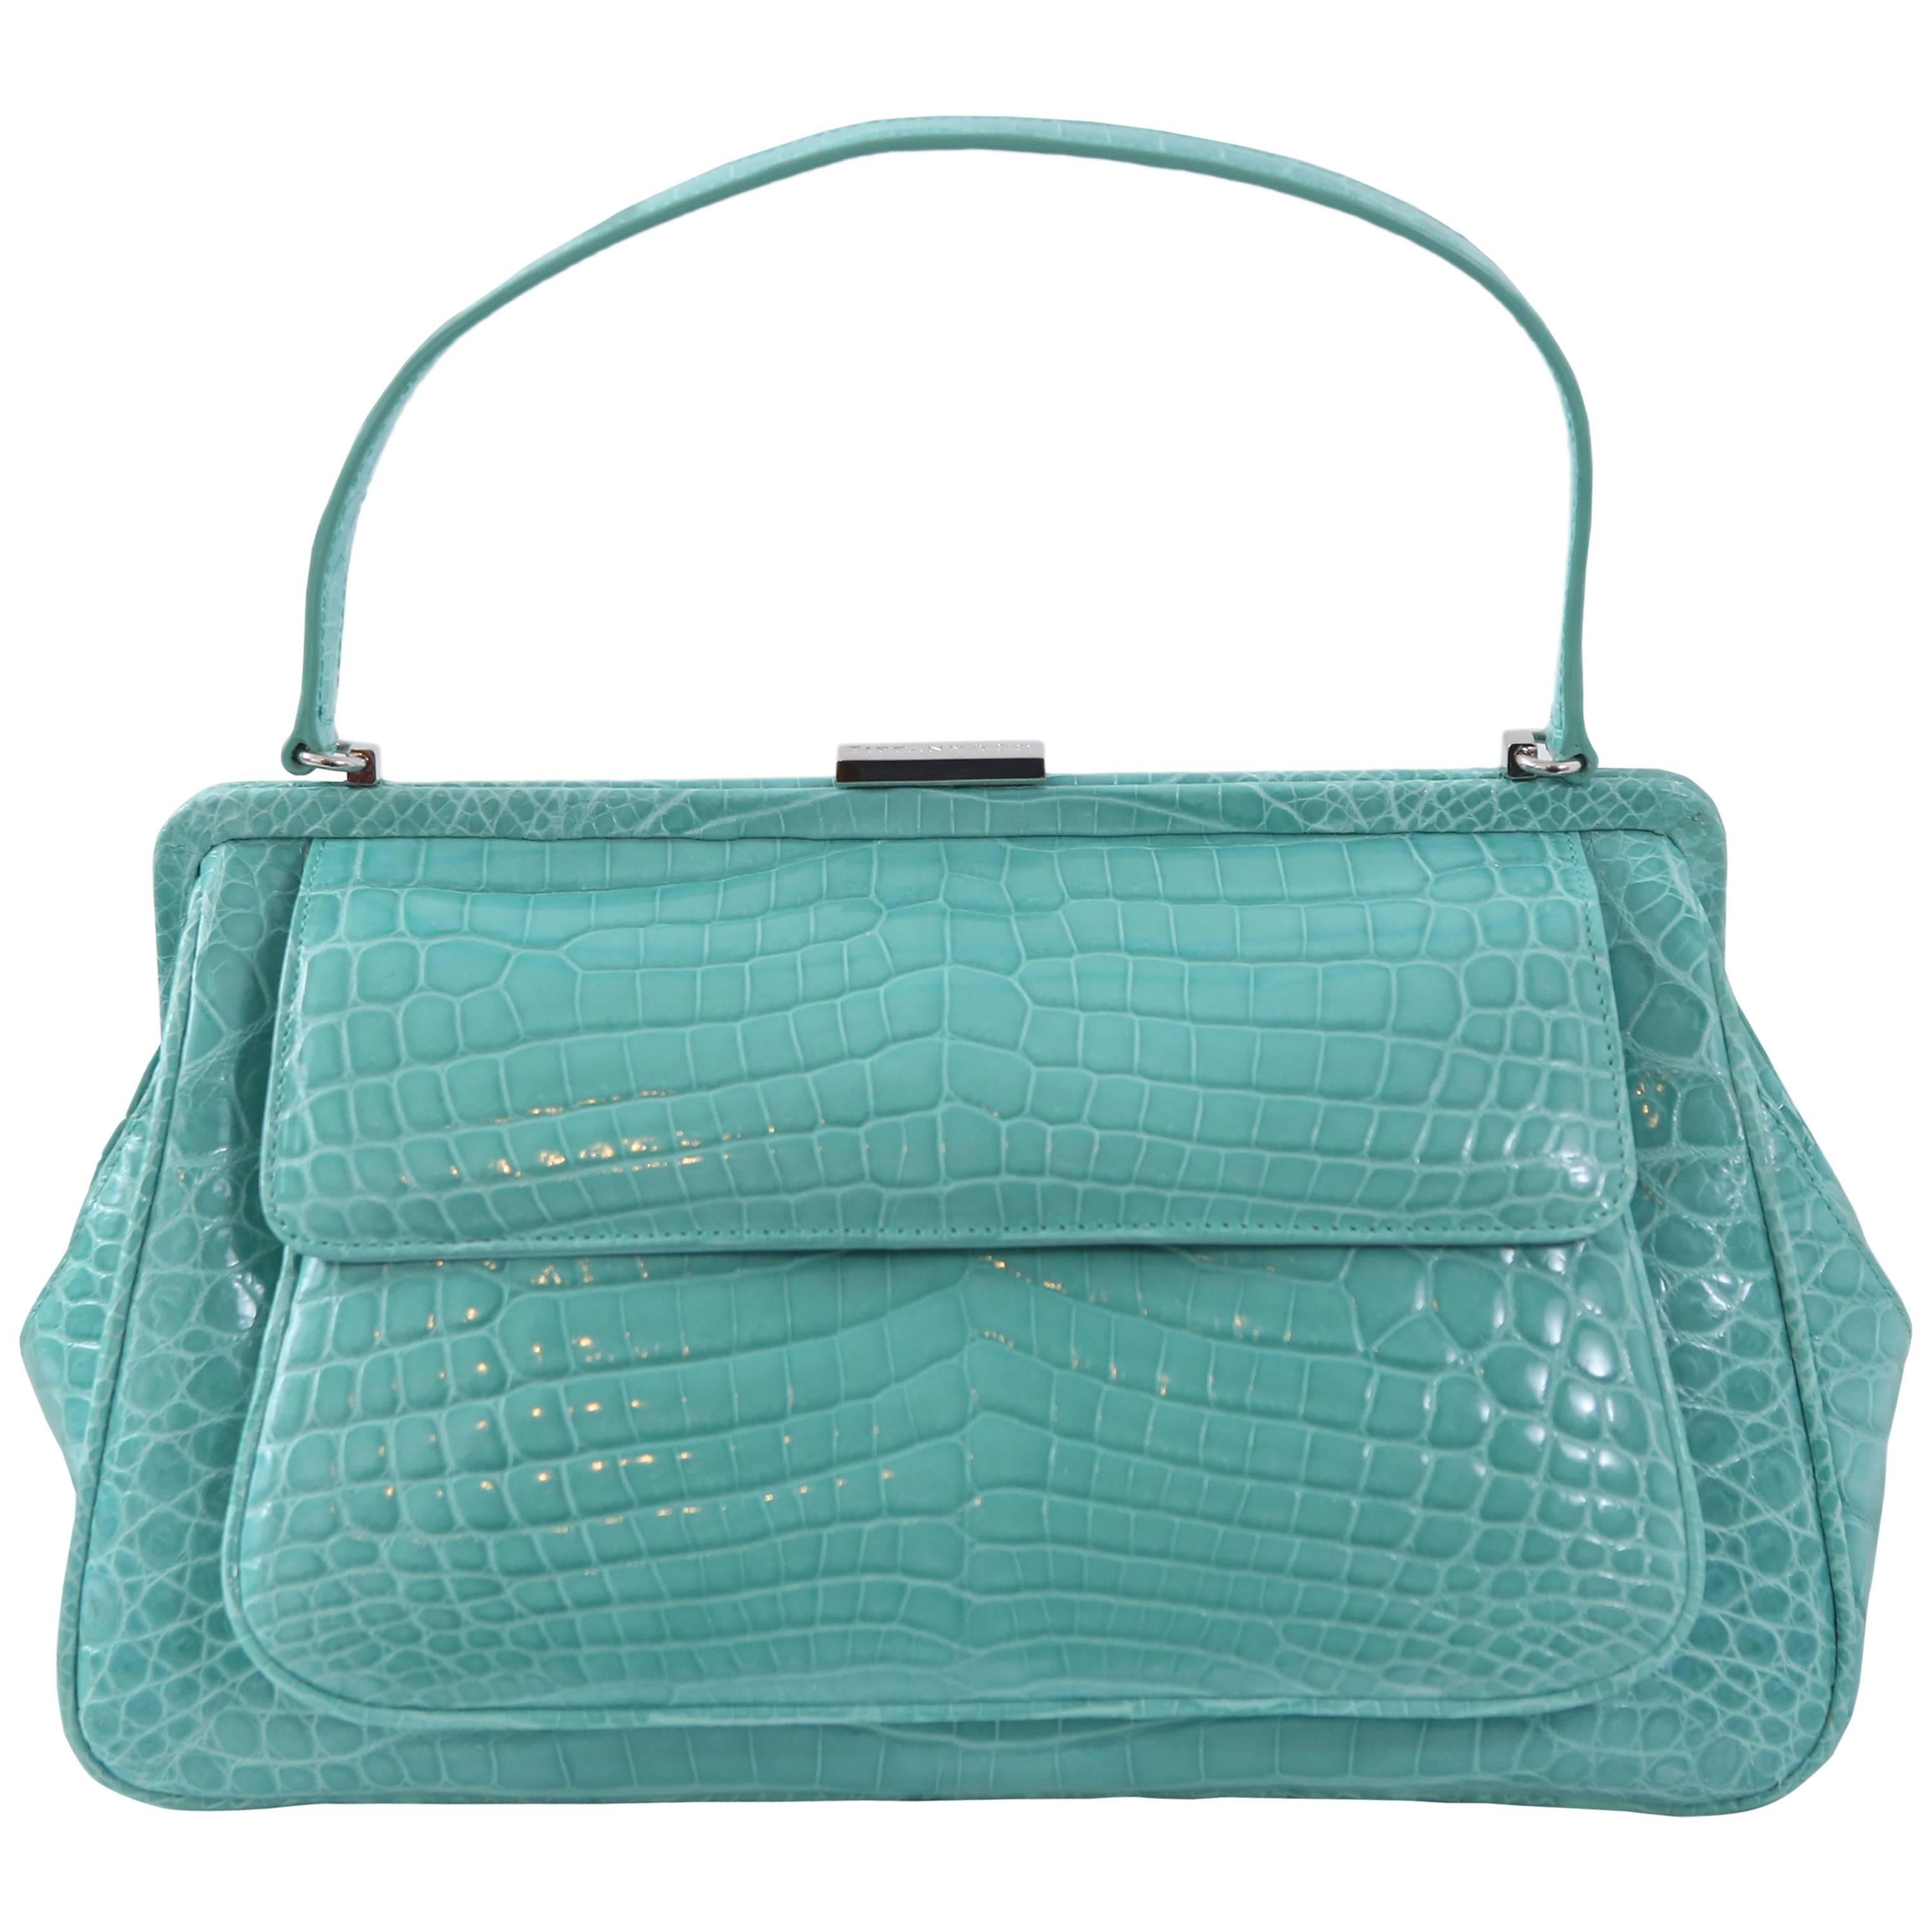 Tiffany & Co. "Laurelton" Crocodile Handbag in Tiffany Blue